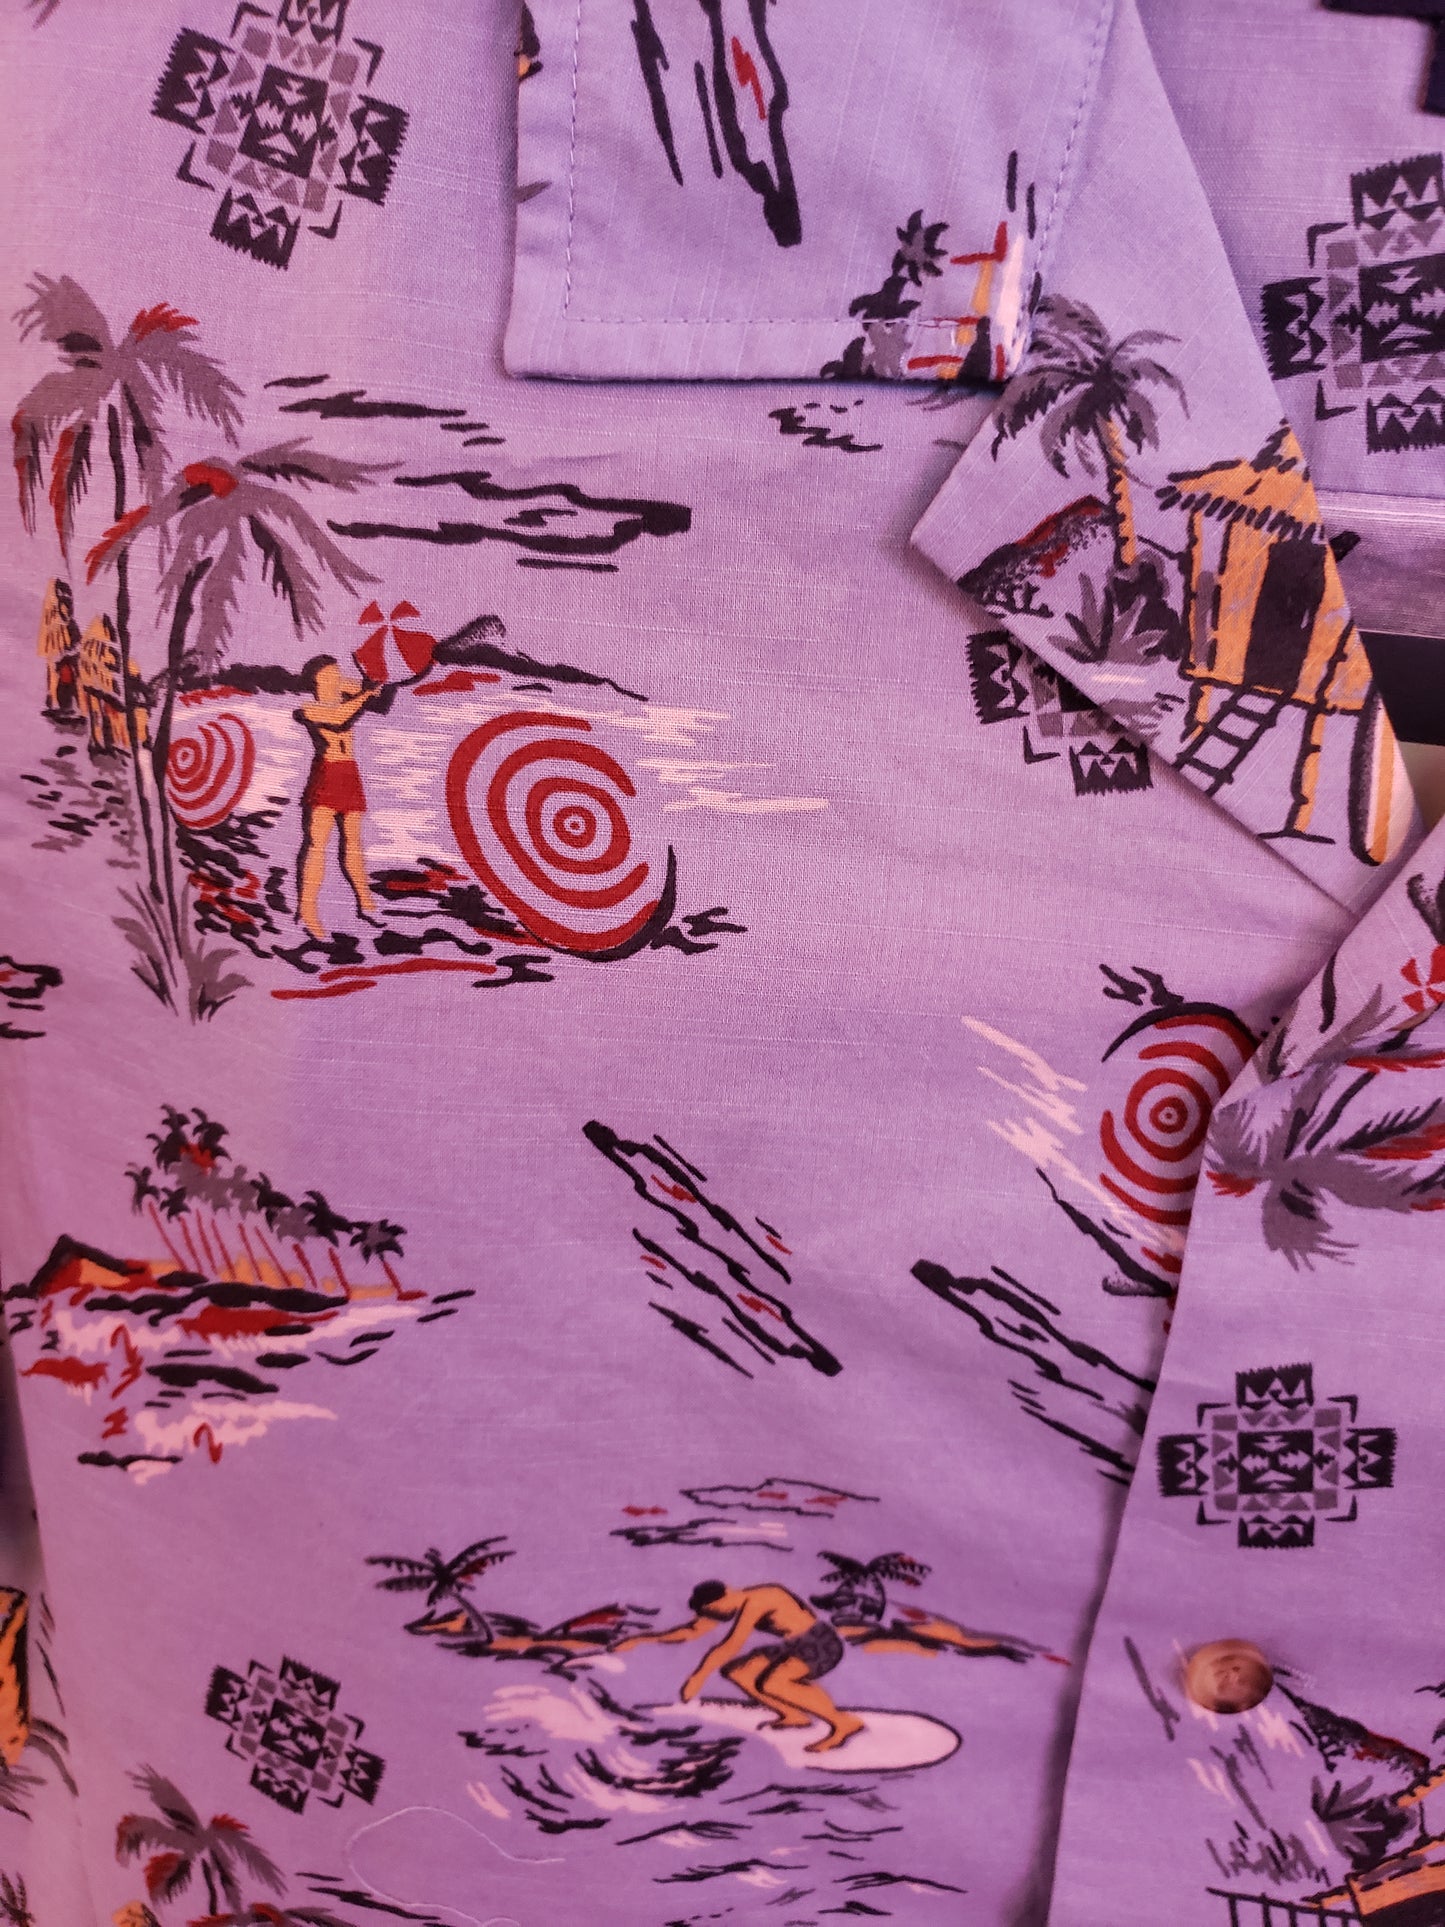 Pendleton Men's Aloha Shirt in "Blue Palms" pattern